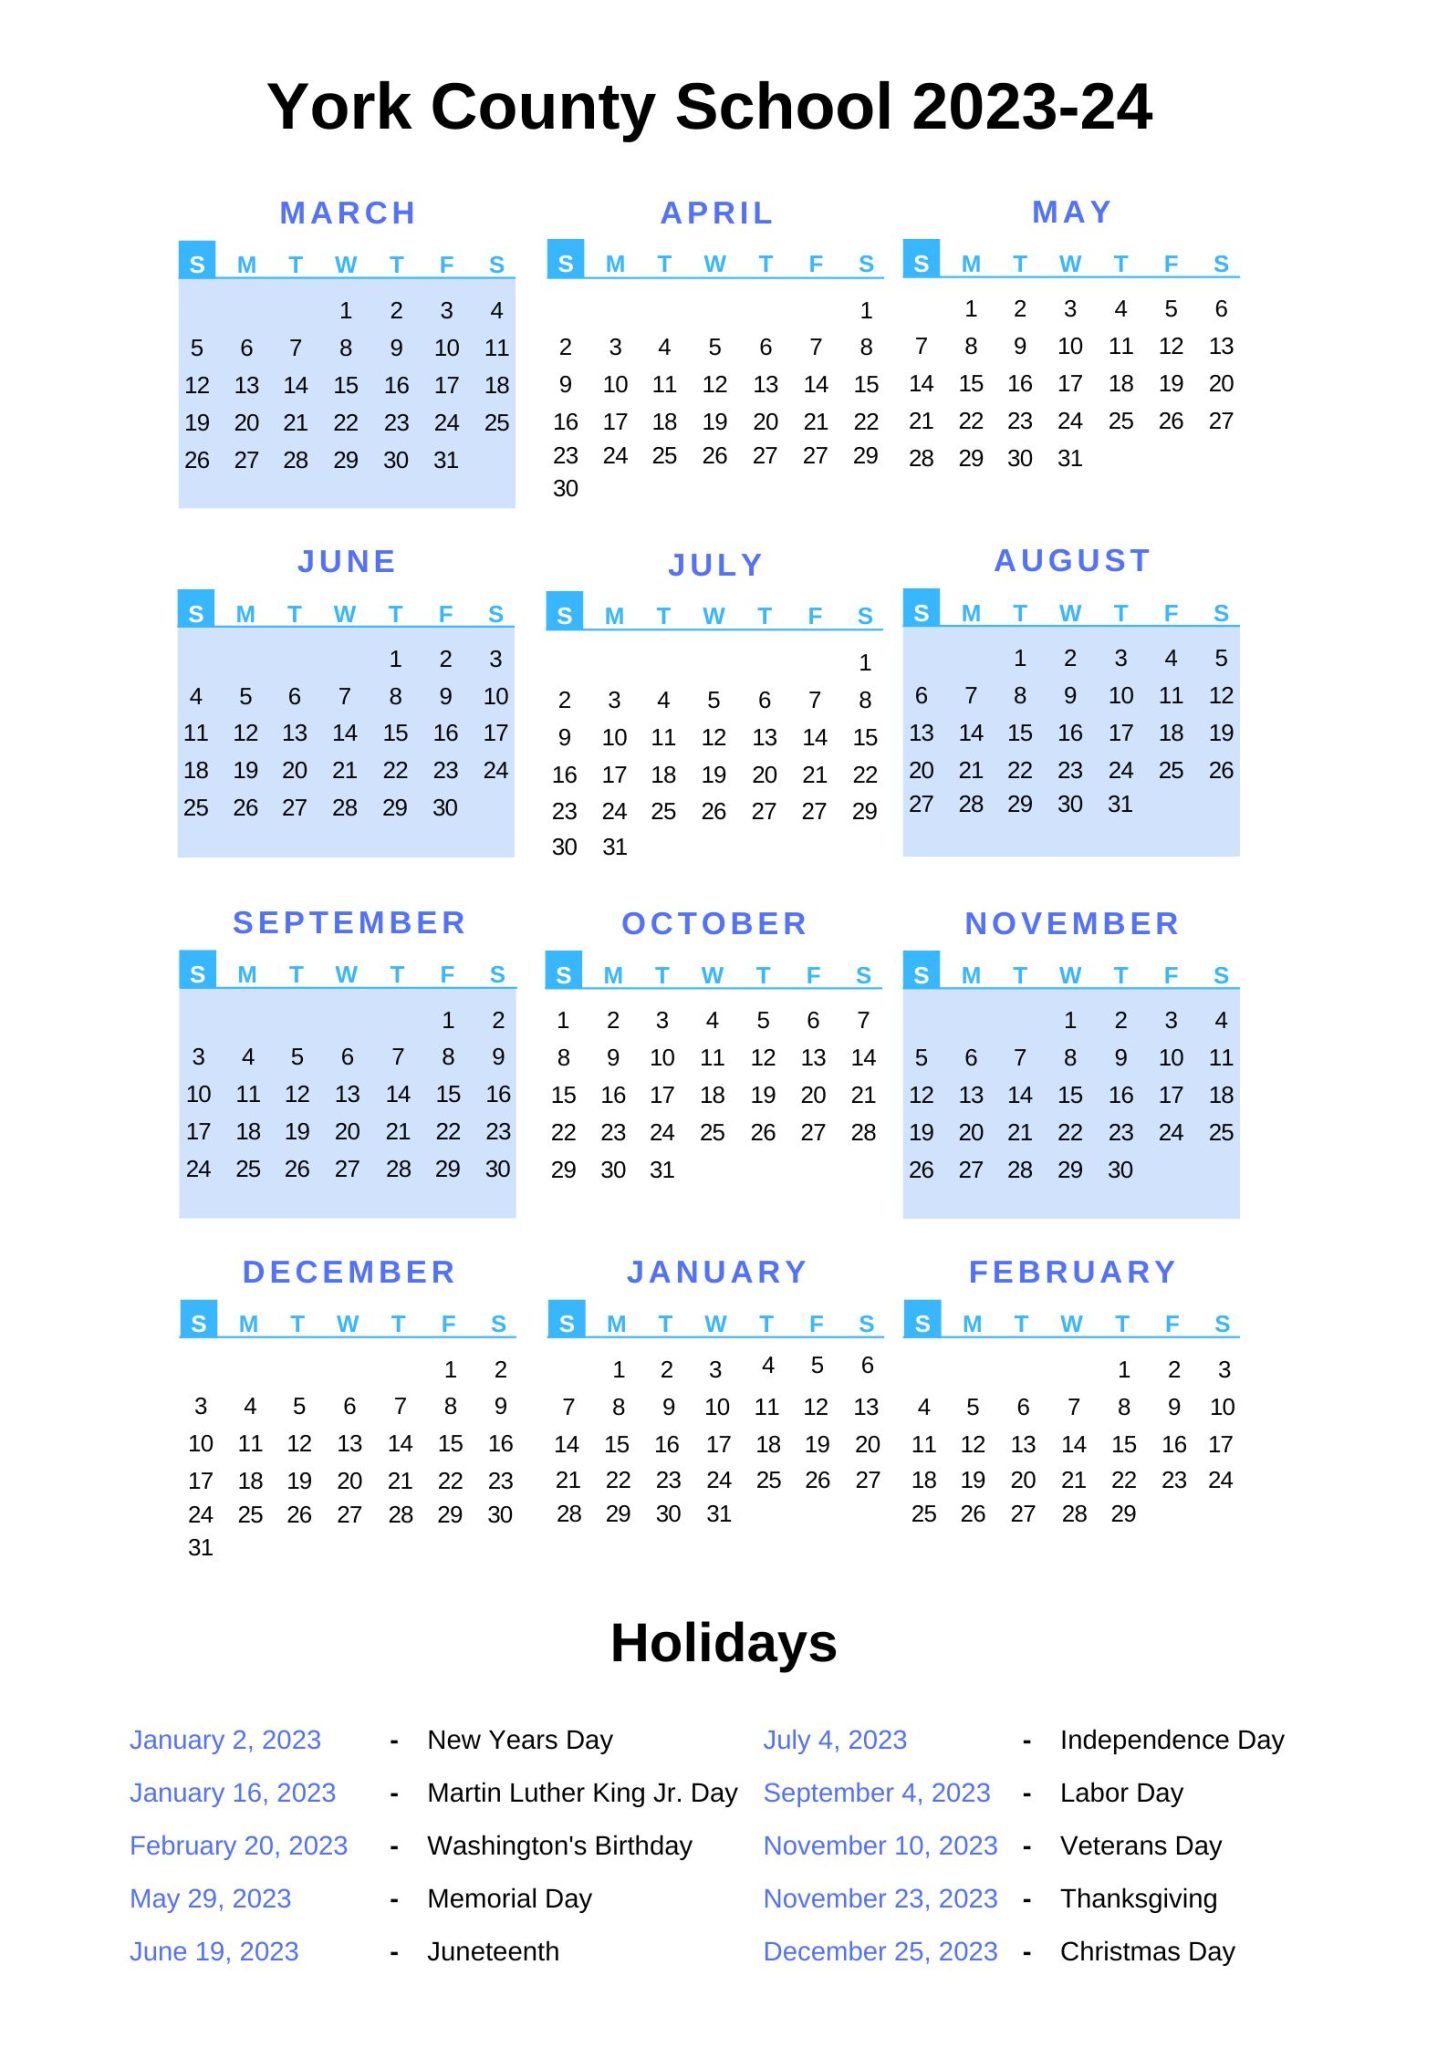 York County School Calendar 202324 with Holidays